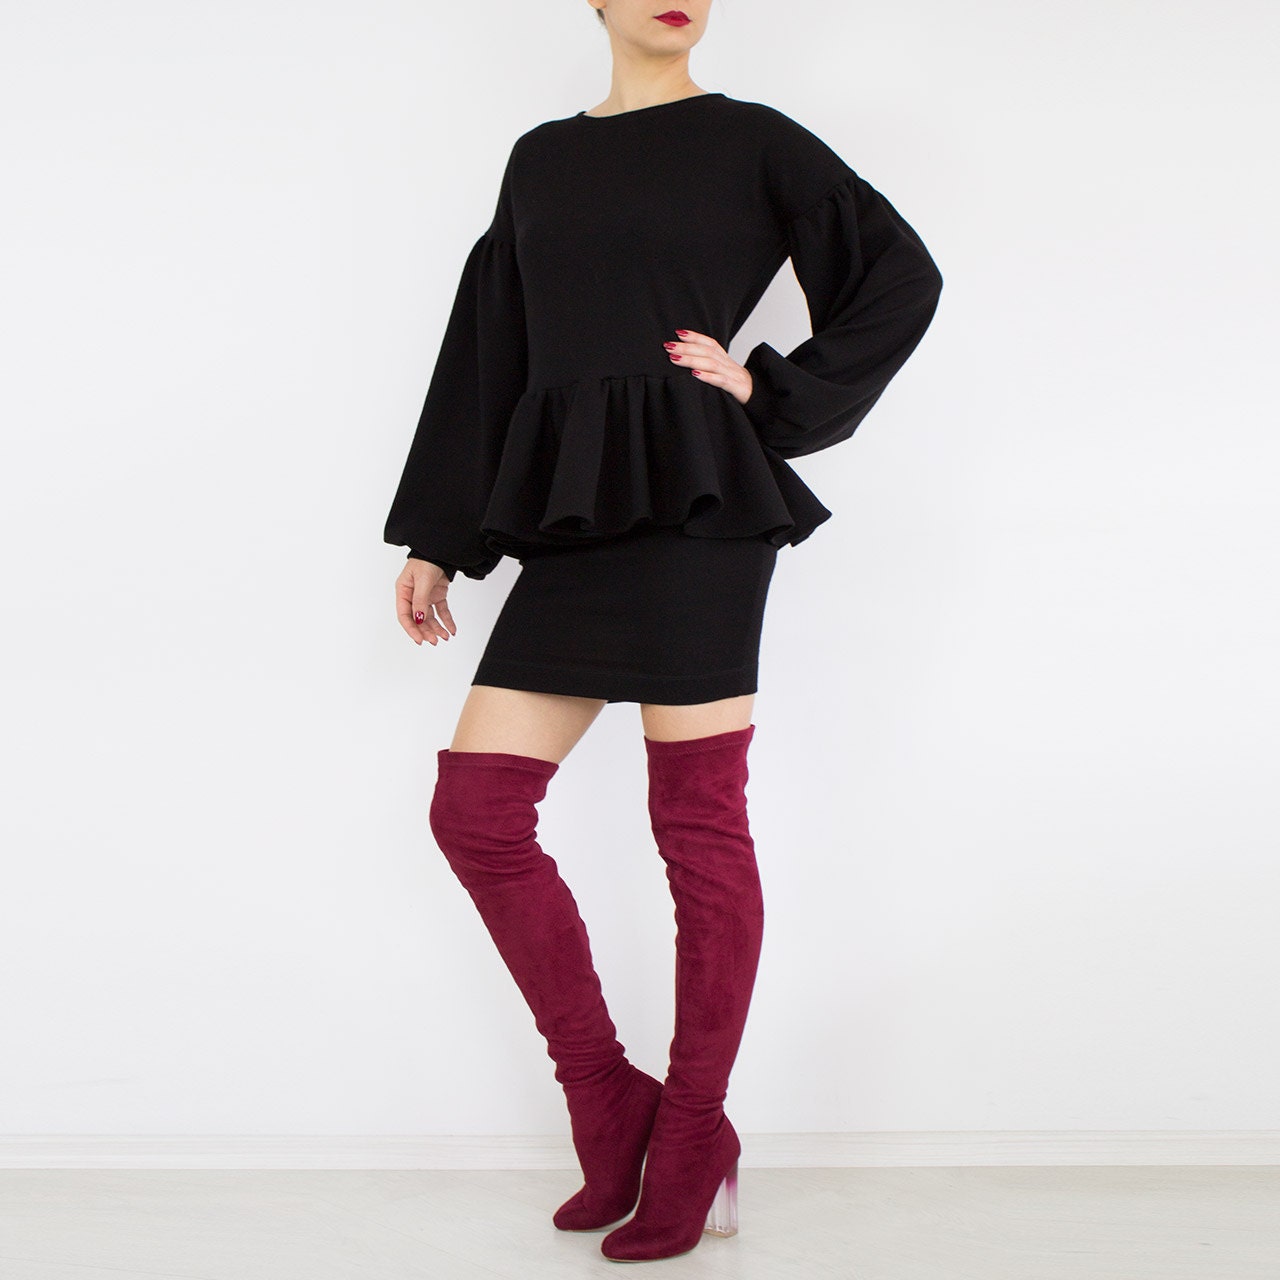 Evening dress/ Sweater dress/ Red mini dress/ Top and skirt | Etsy